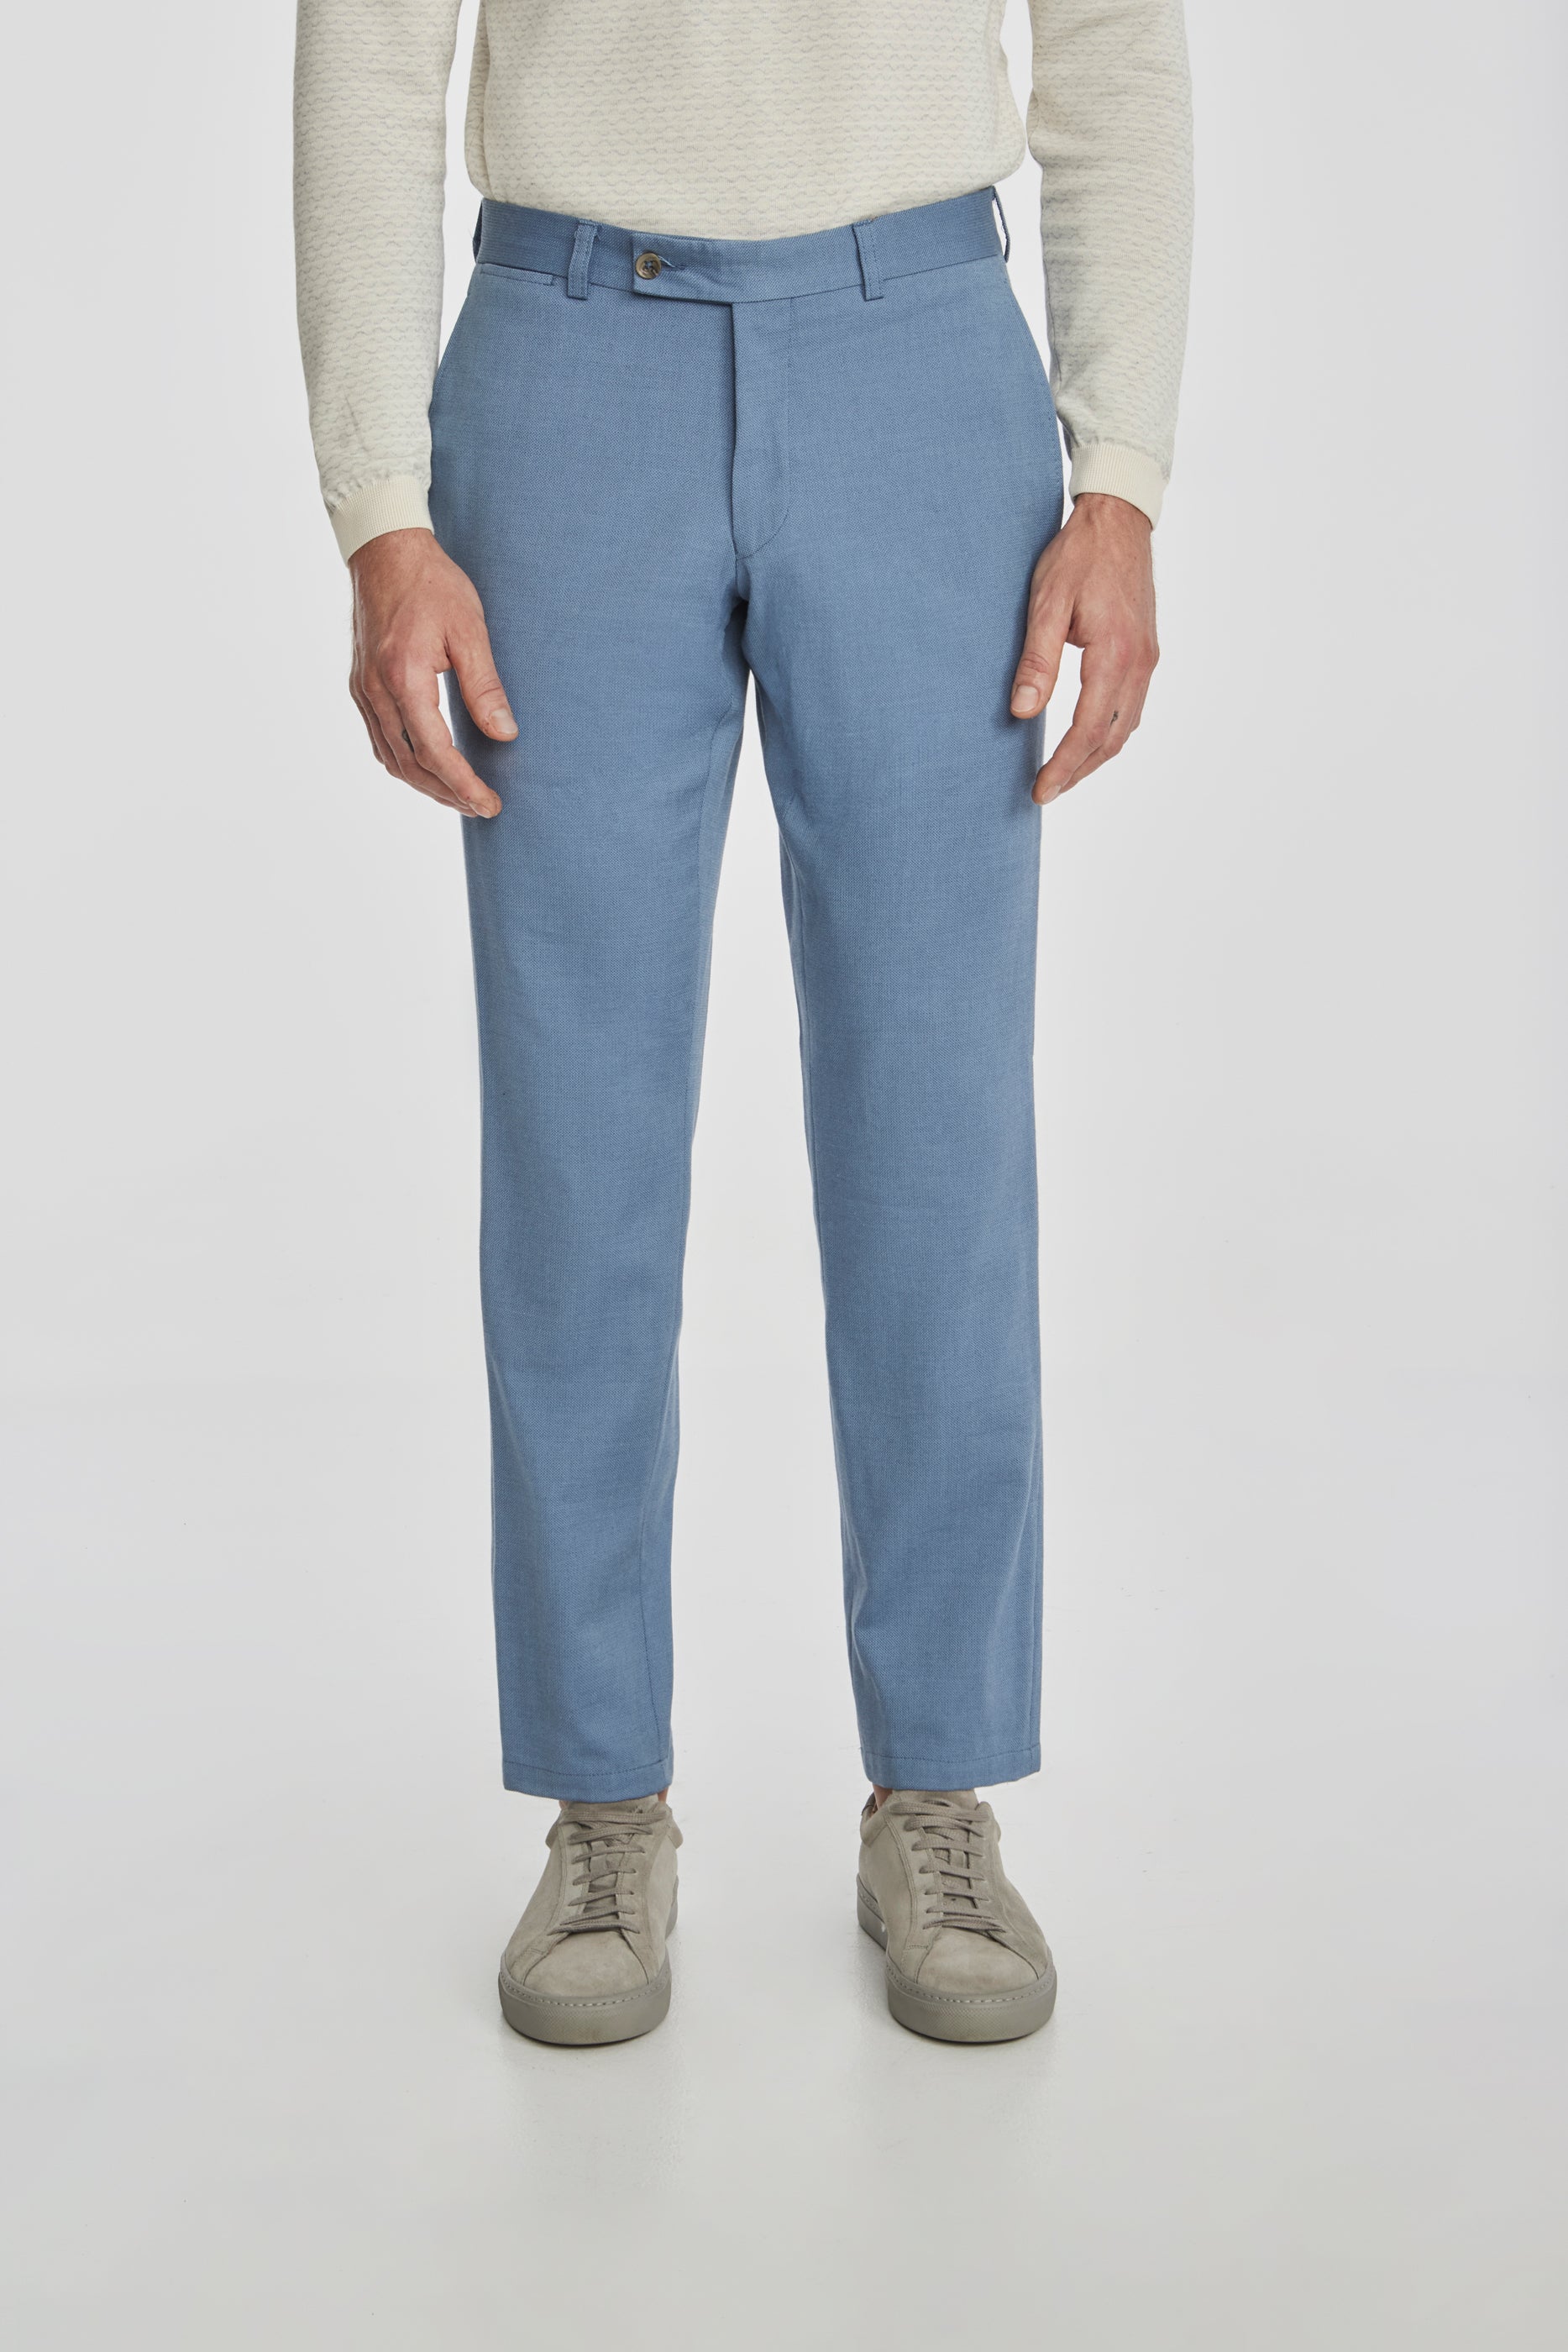 Alt view Palmer Textured Cotton, Wool Stretch Trouser in Light Blue